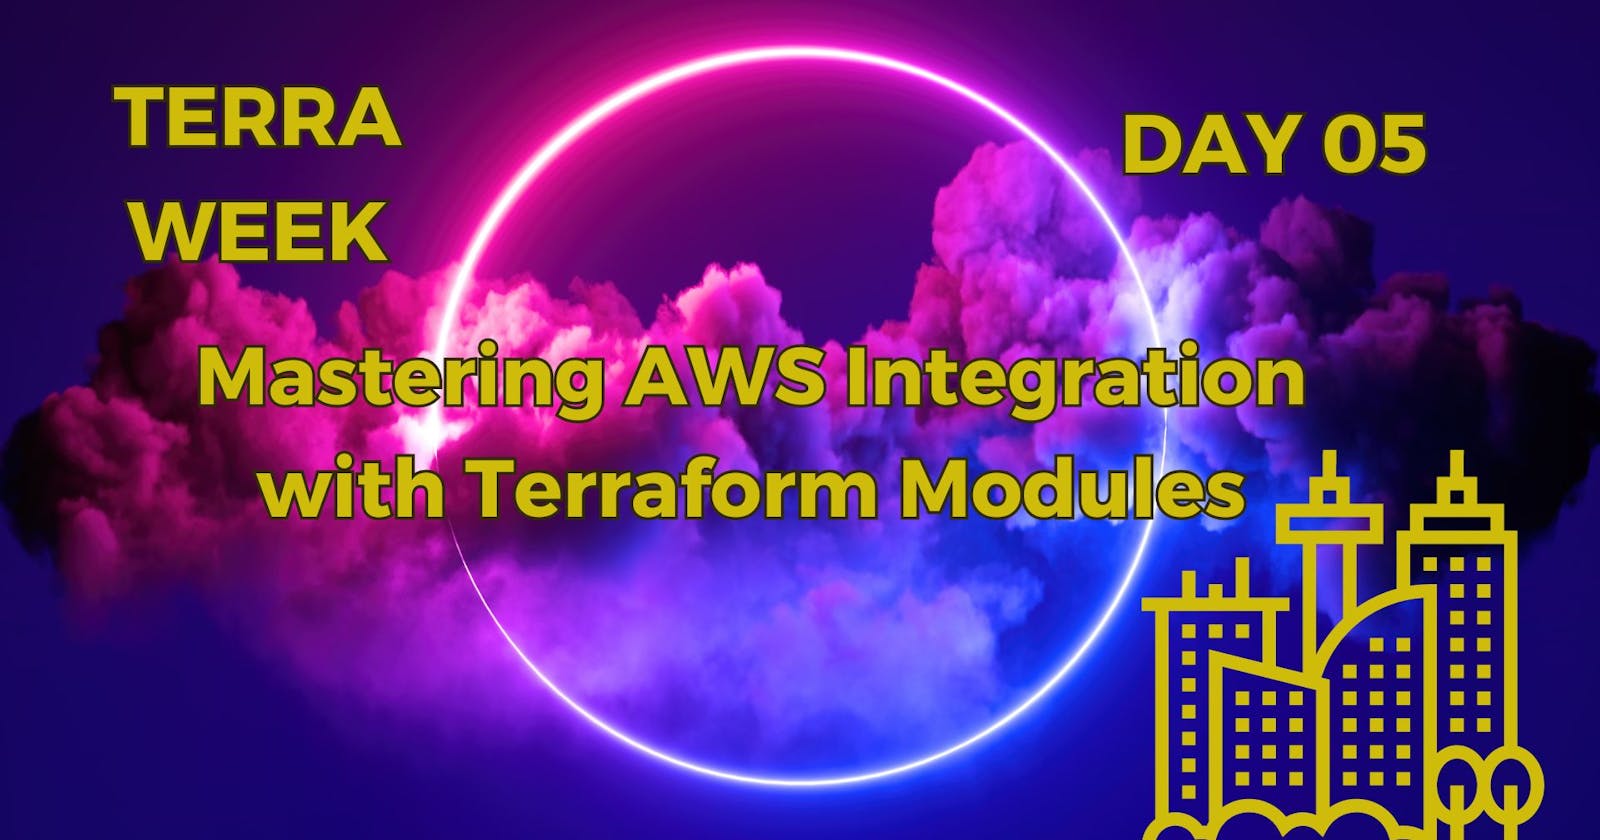 Terra Week Day 05: Mastering AWS Integration with Terraform Modules